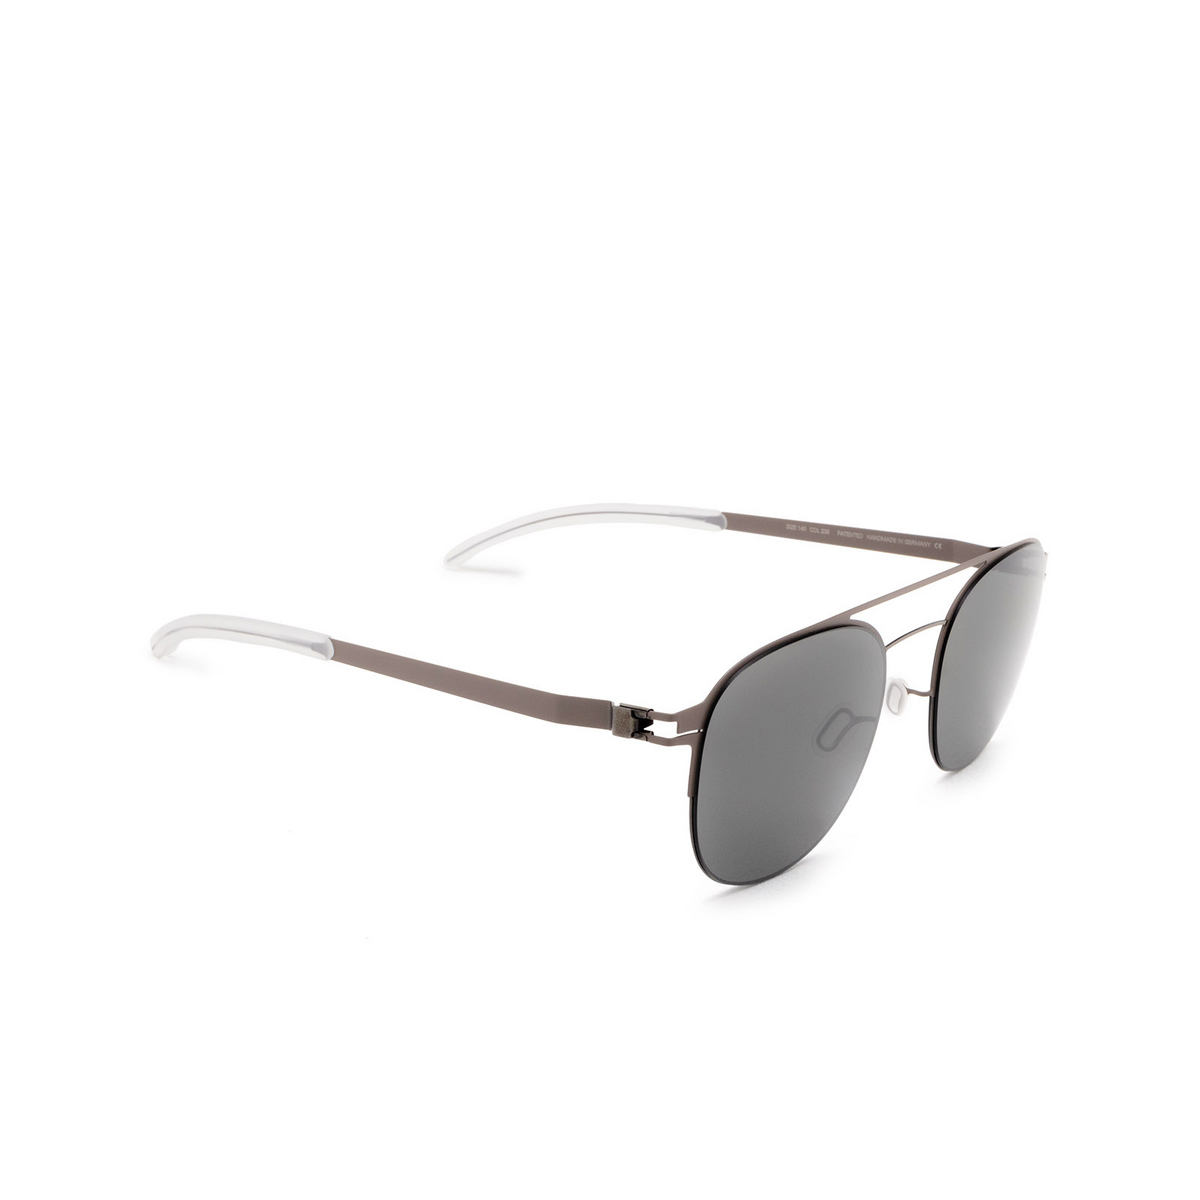 Mykita PARK SUN Sunglasses 235 Shiny Graphite/Mole Grey - three-quarters view